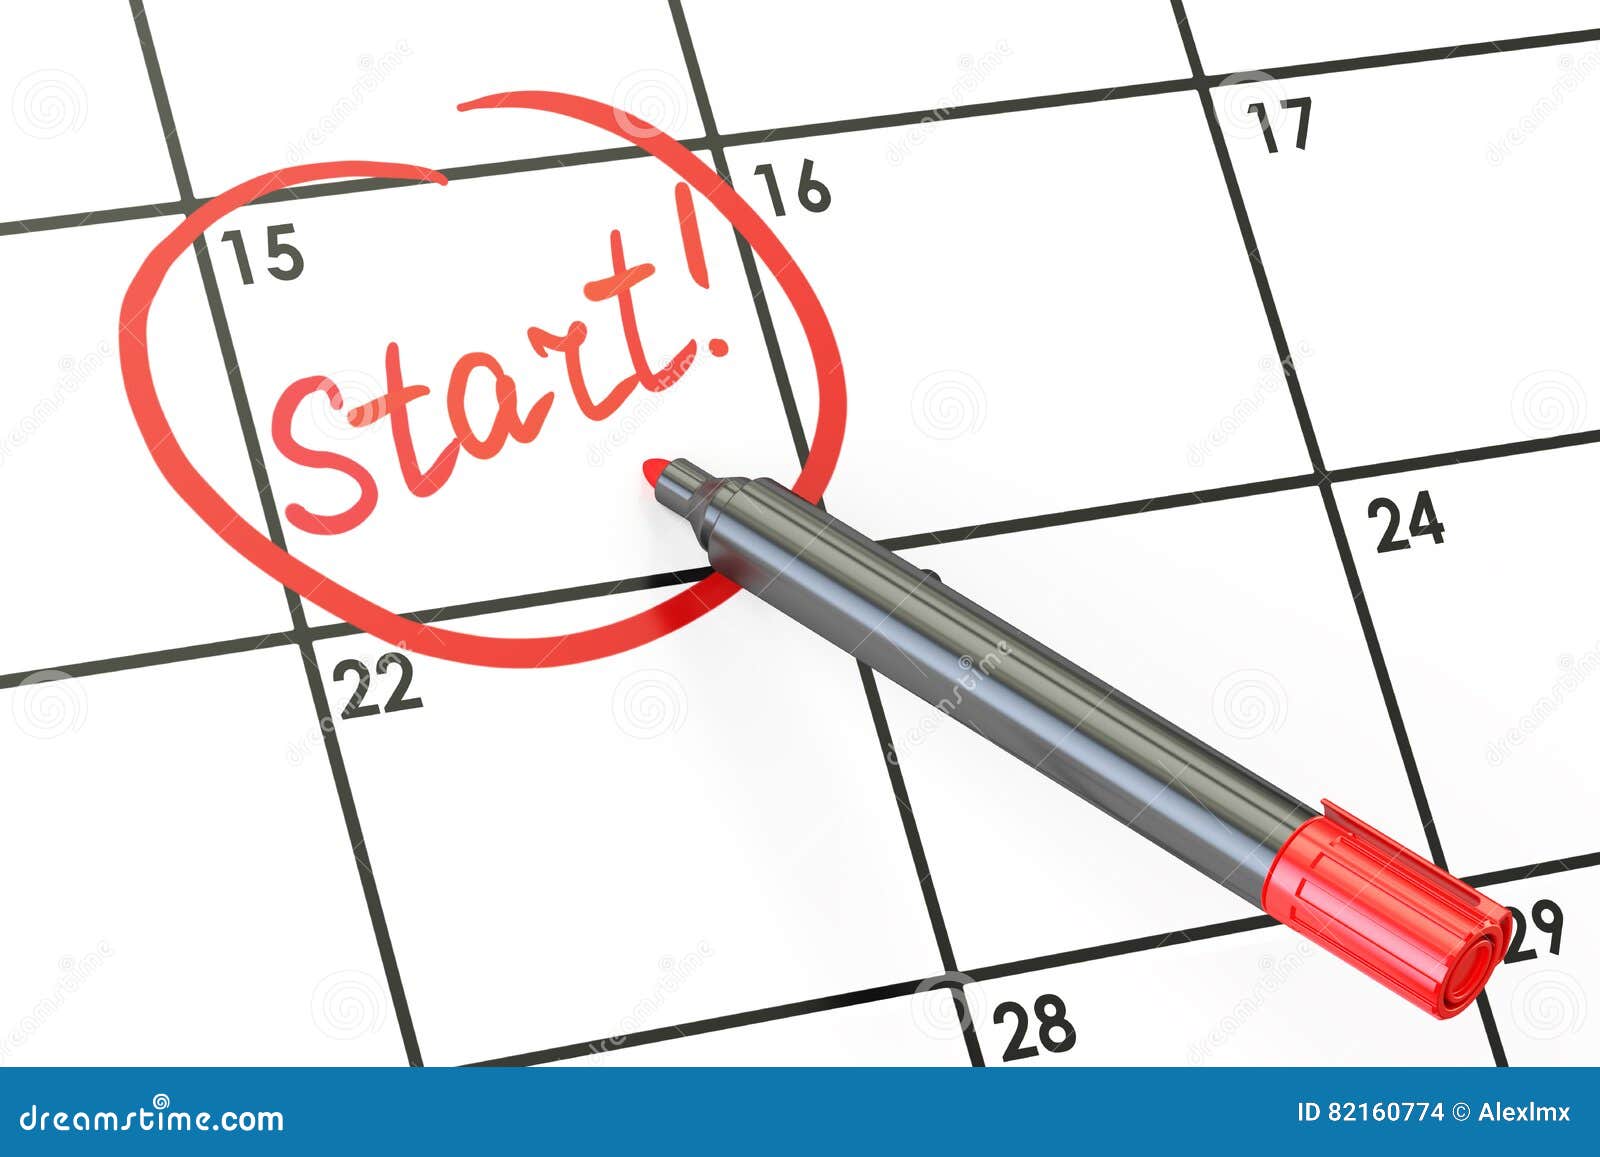 start-date-on-calendar-concept-3d-stock-illustration-illustration-of